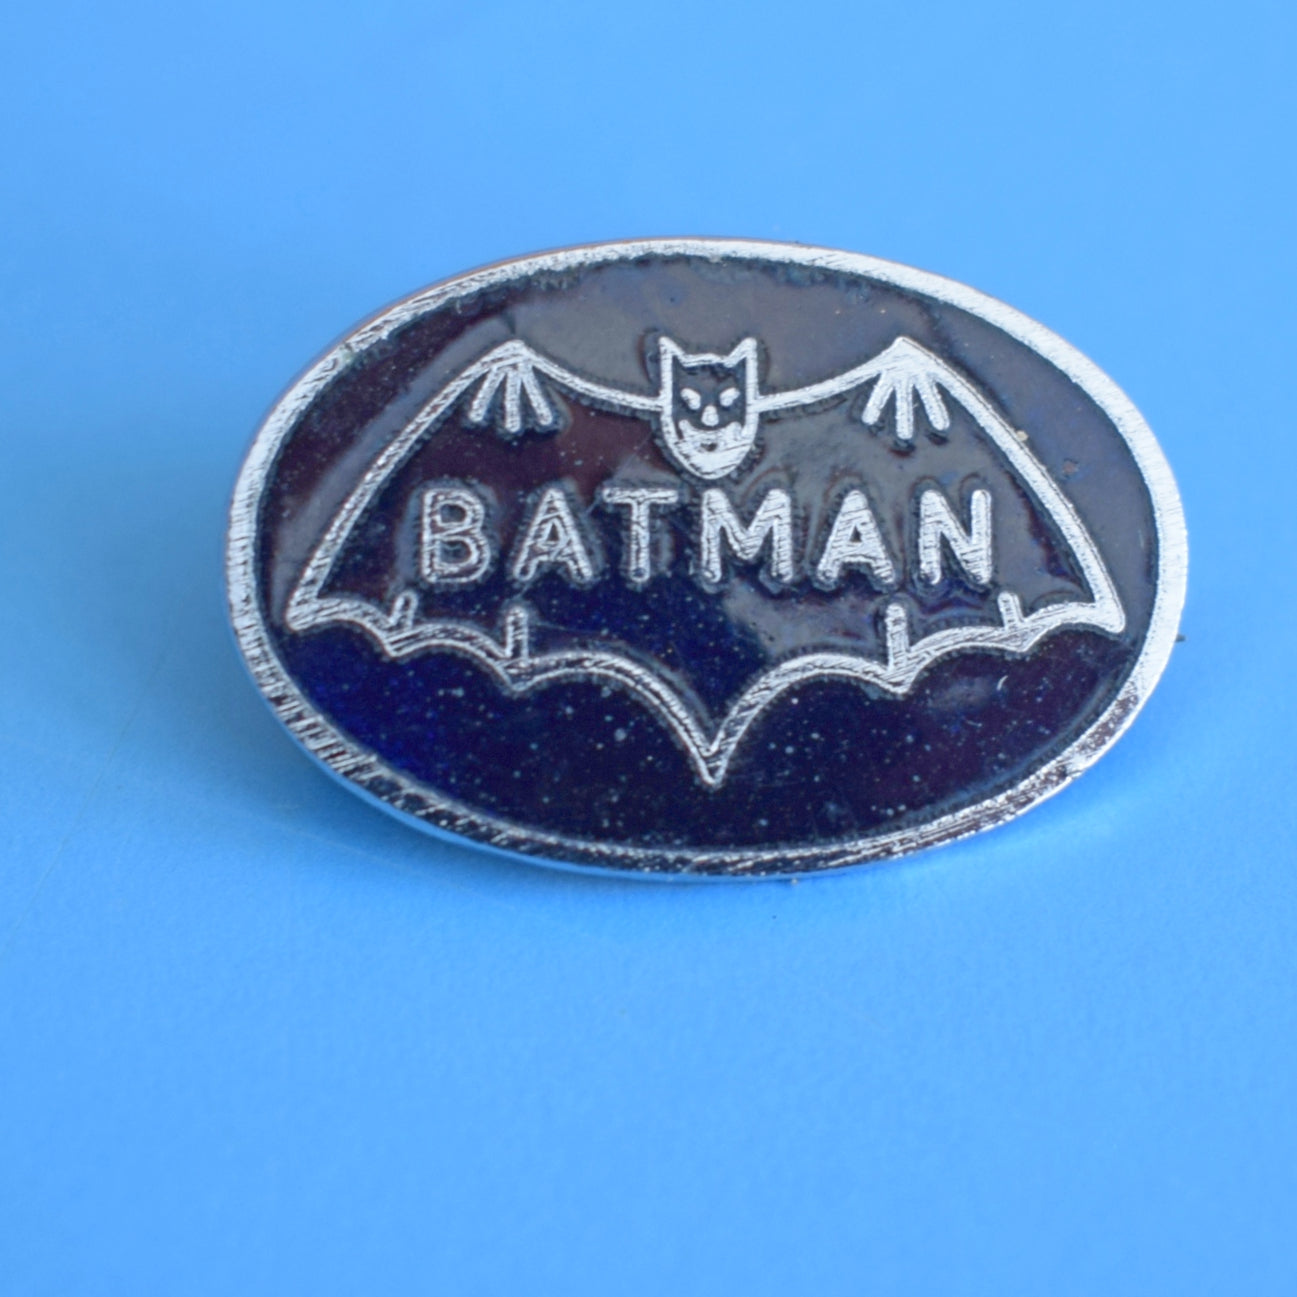 Vintage 1970s Enamel Pins - Superman/ Batman